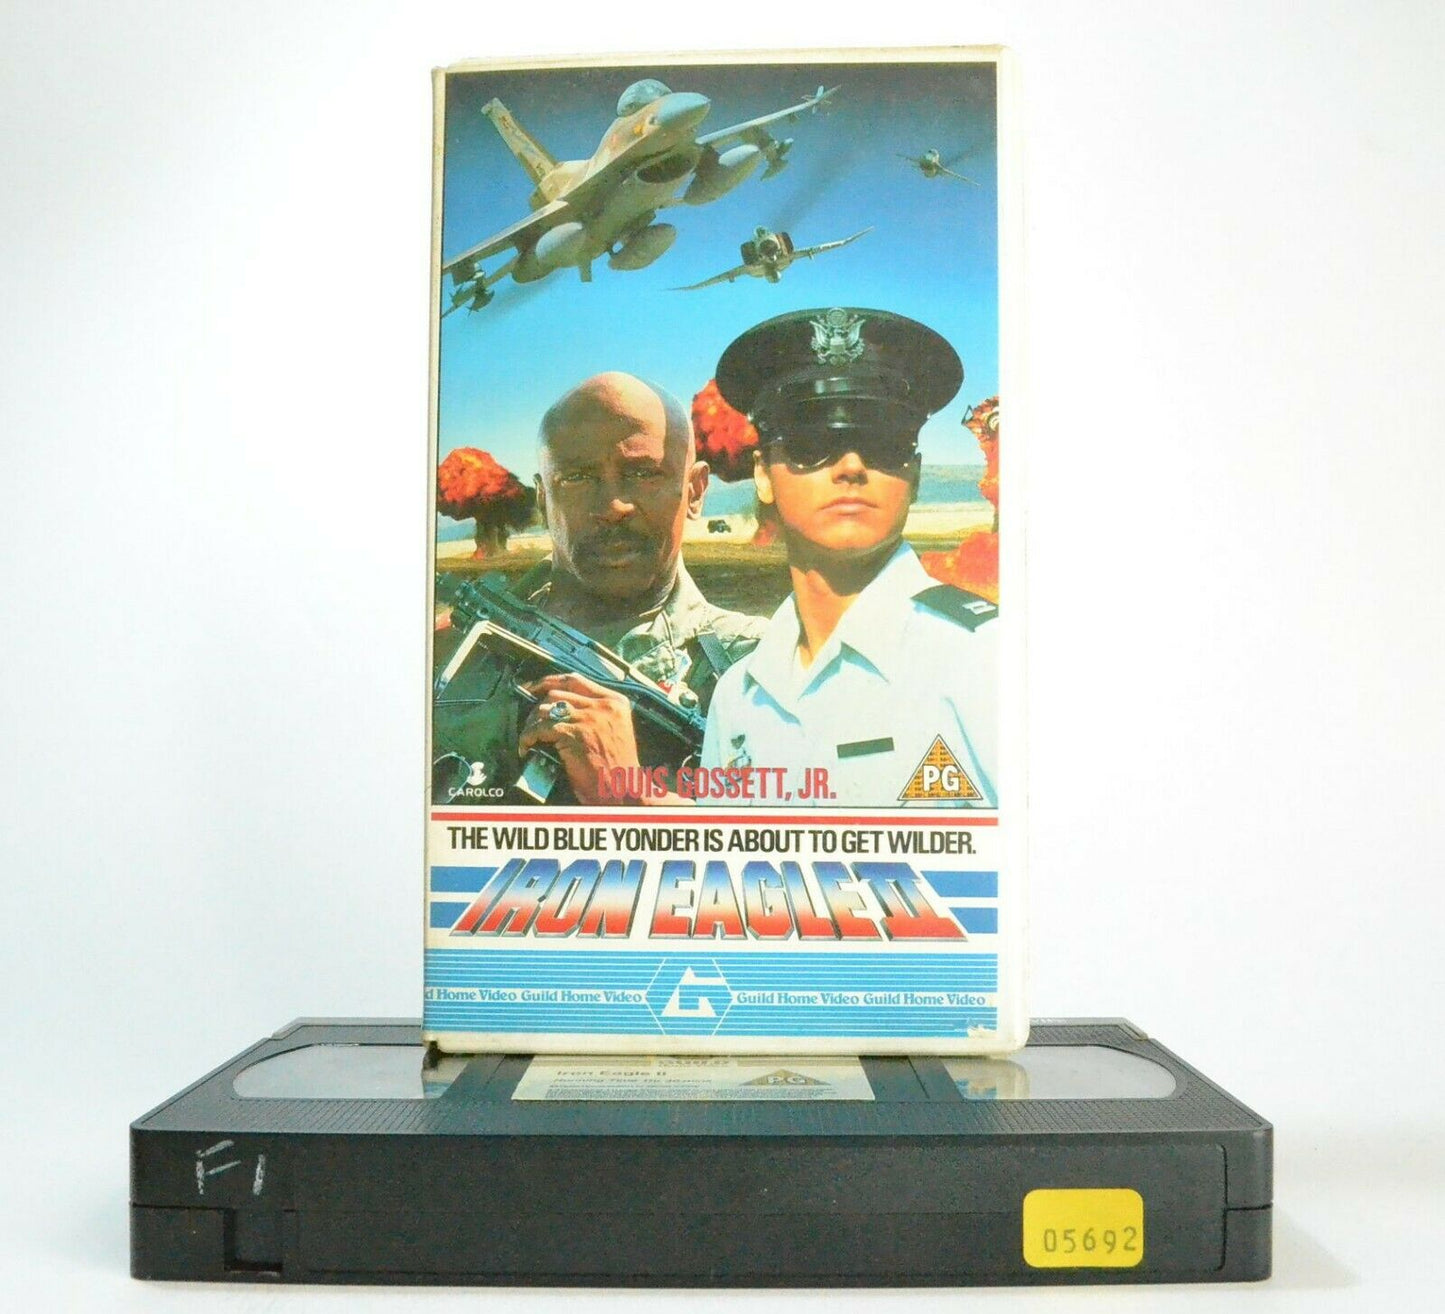 Iron Eagle 2: Guild Home (1990) - Action - Operation Opera - L.Gossett,Jr. - VHS-